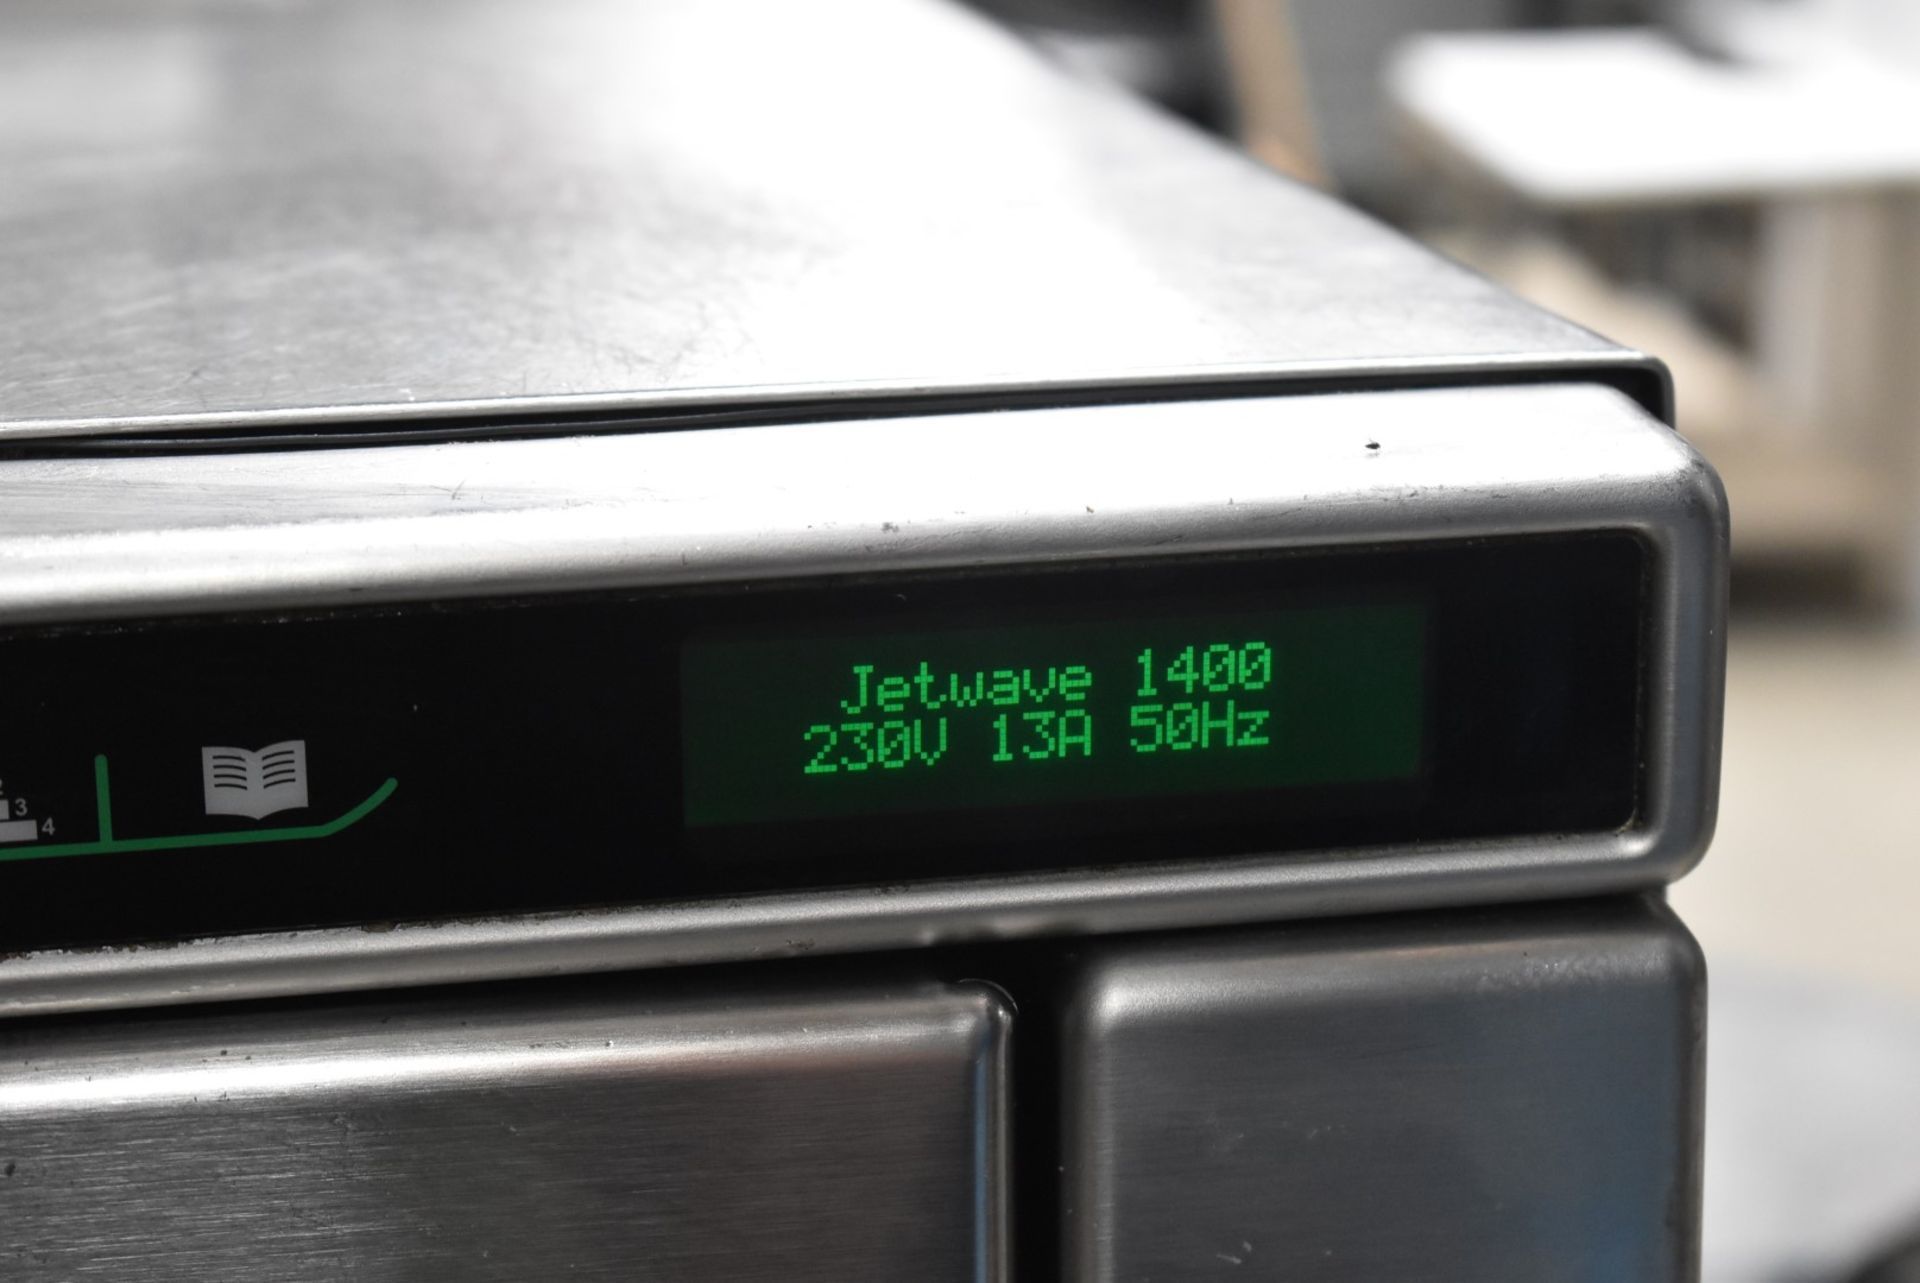 1 x Menumaster Jetwave JET514U High Speed Combination Microwave Oven - RRP £2,400 - Image 2 of 7